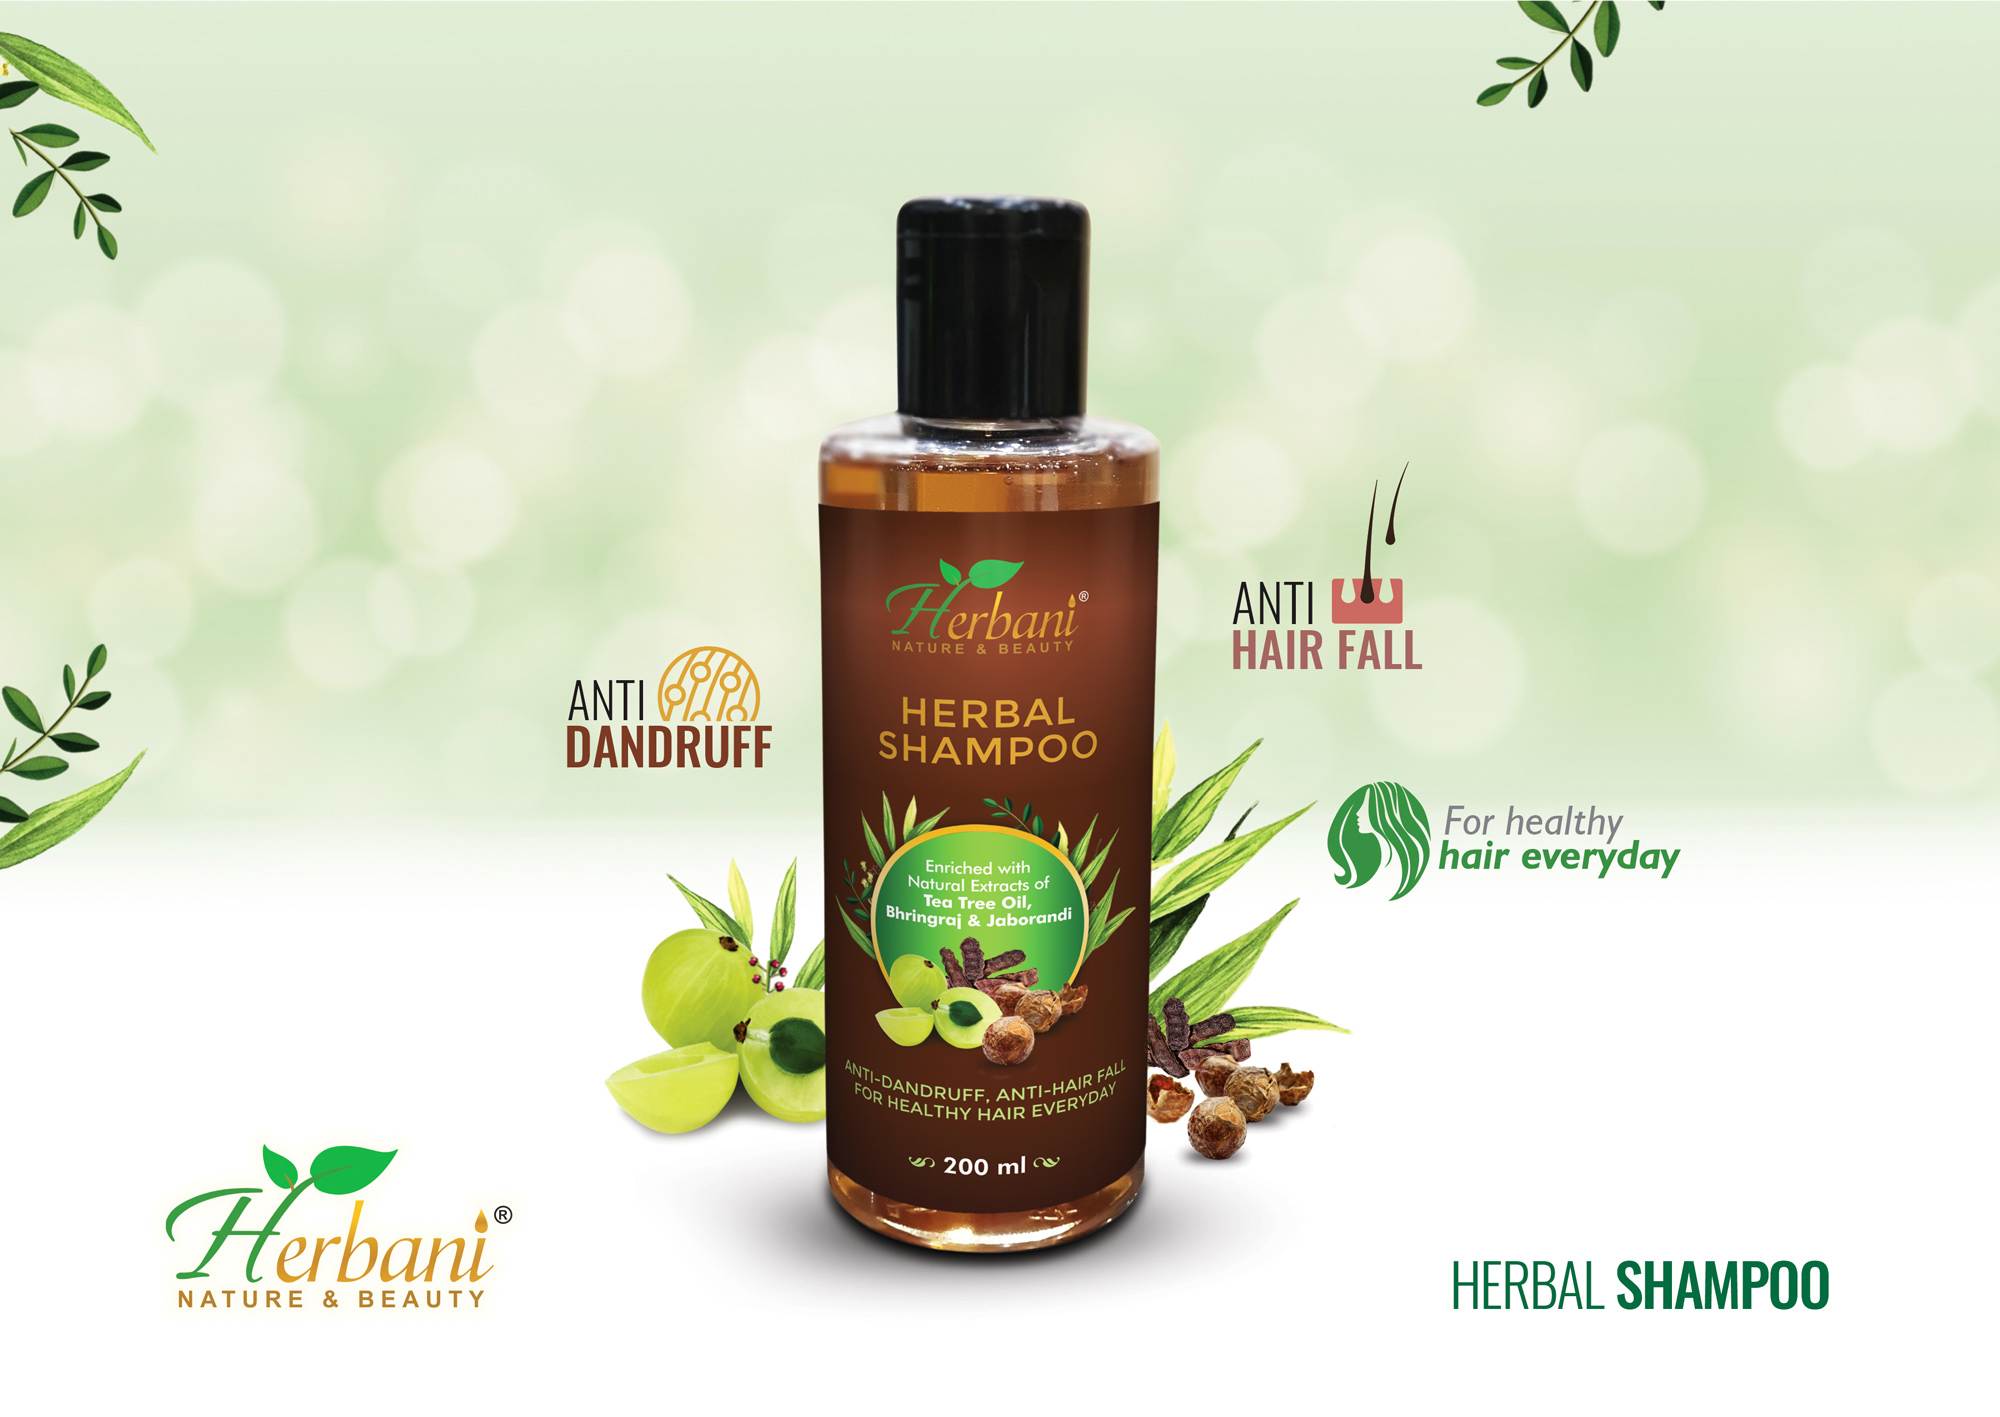 Herbani Herbal Shampoo